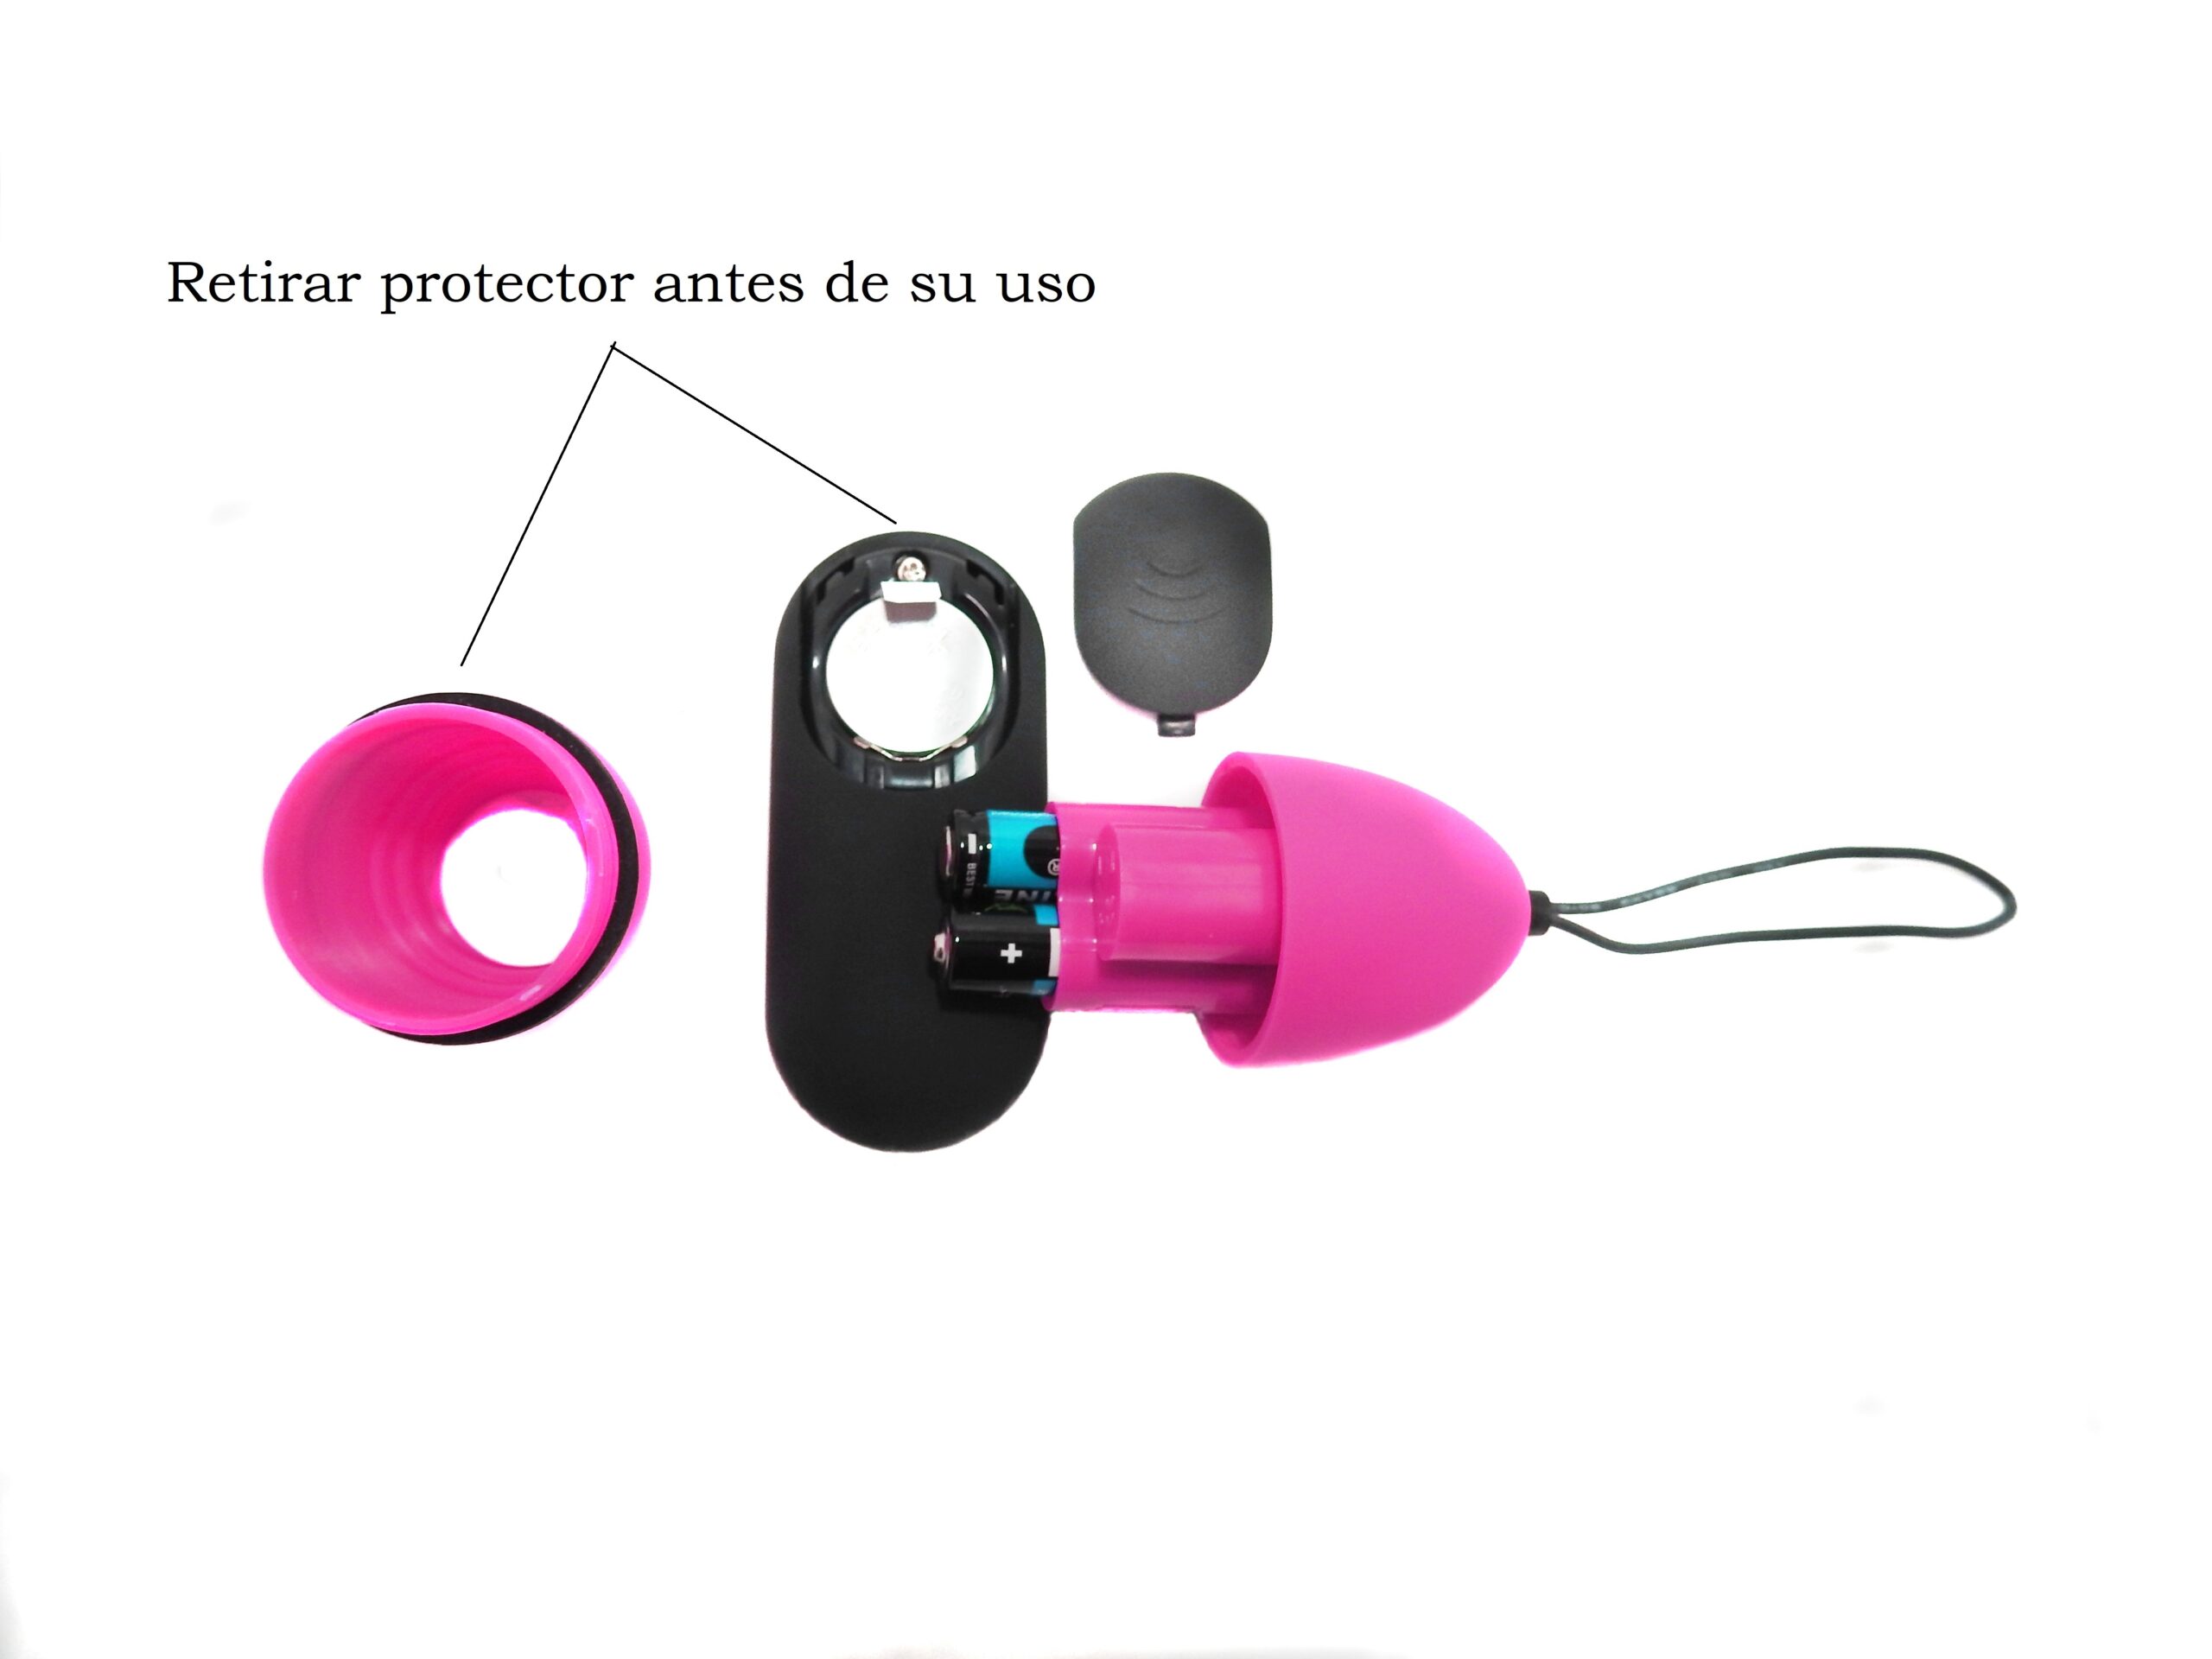 Remote-Control-Egg-G2-Pink-OPR-3090033-4